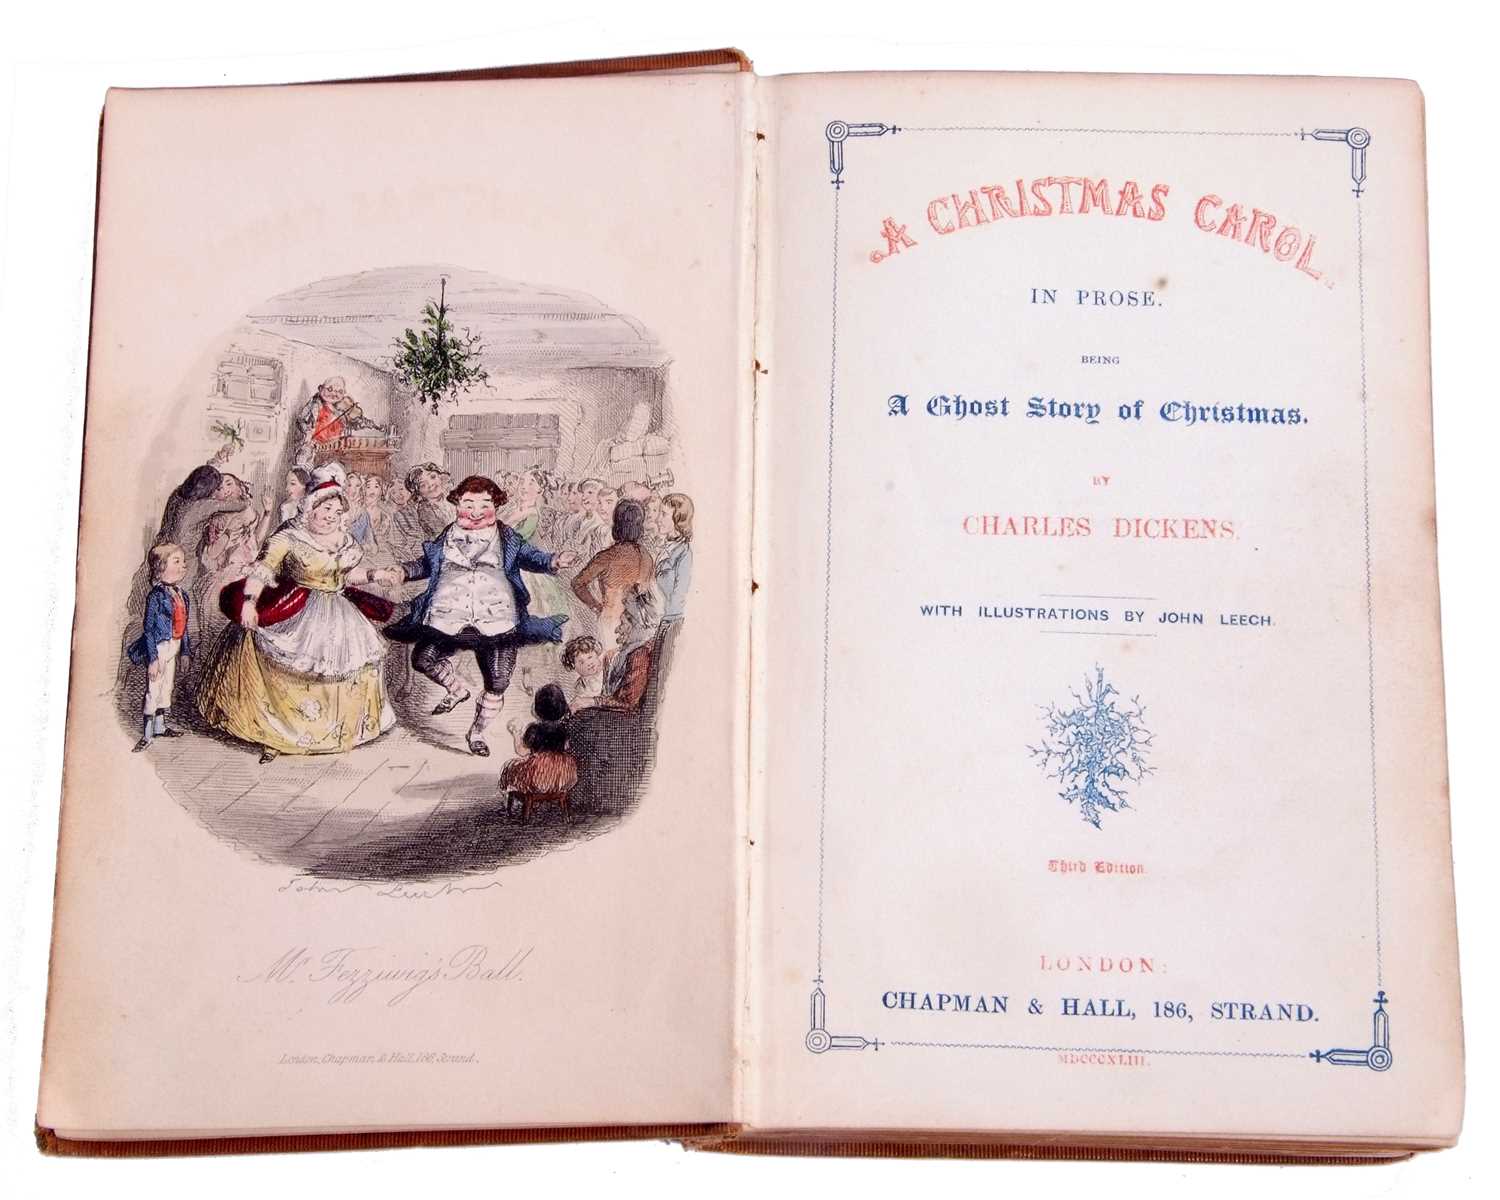 CHARLES DICKENS: A CHRISTMAS CAROL, ill John Leech, London, Chapman & Hall, 1843, 3rd edition, 4